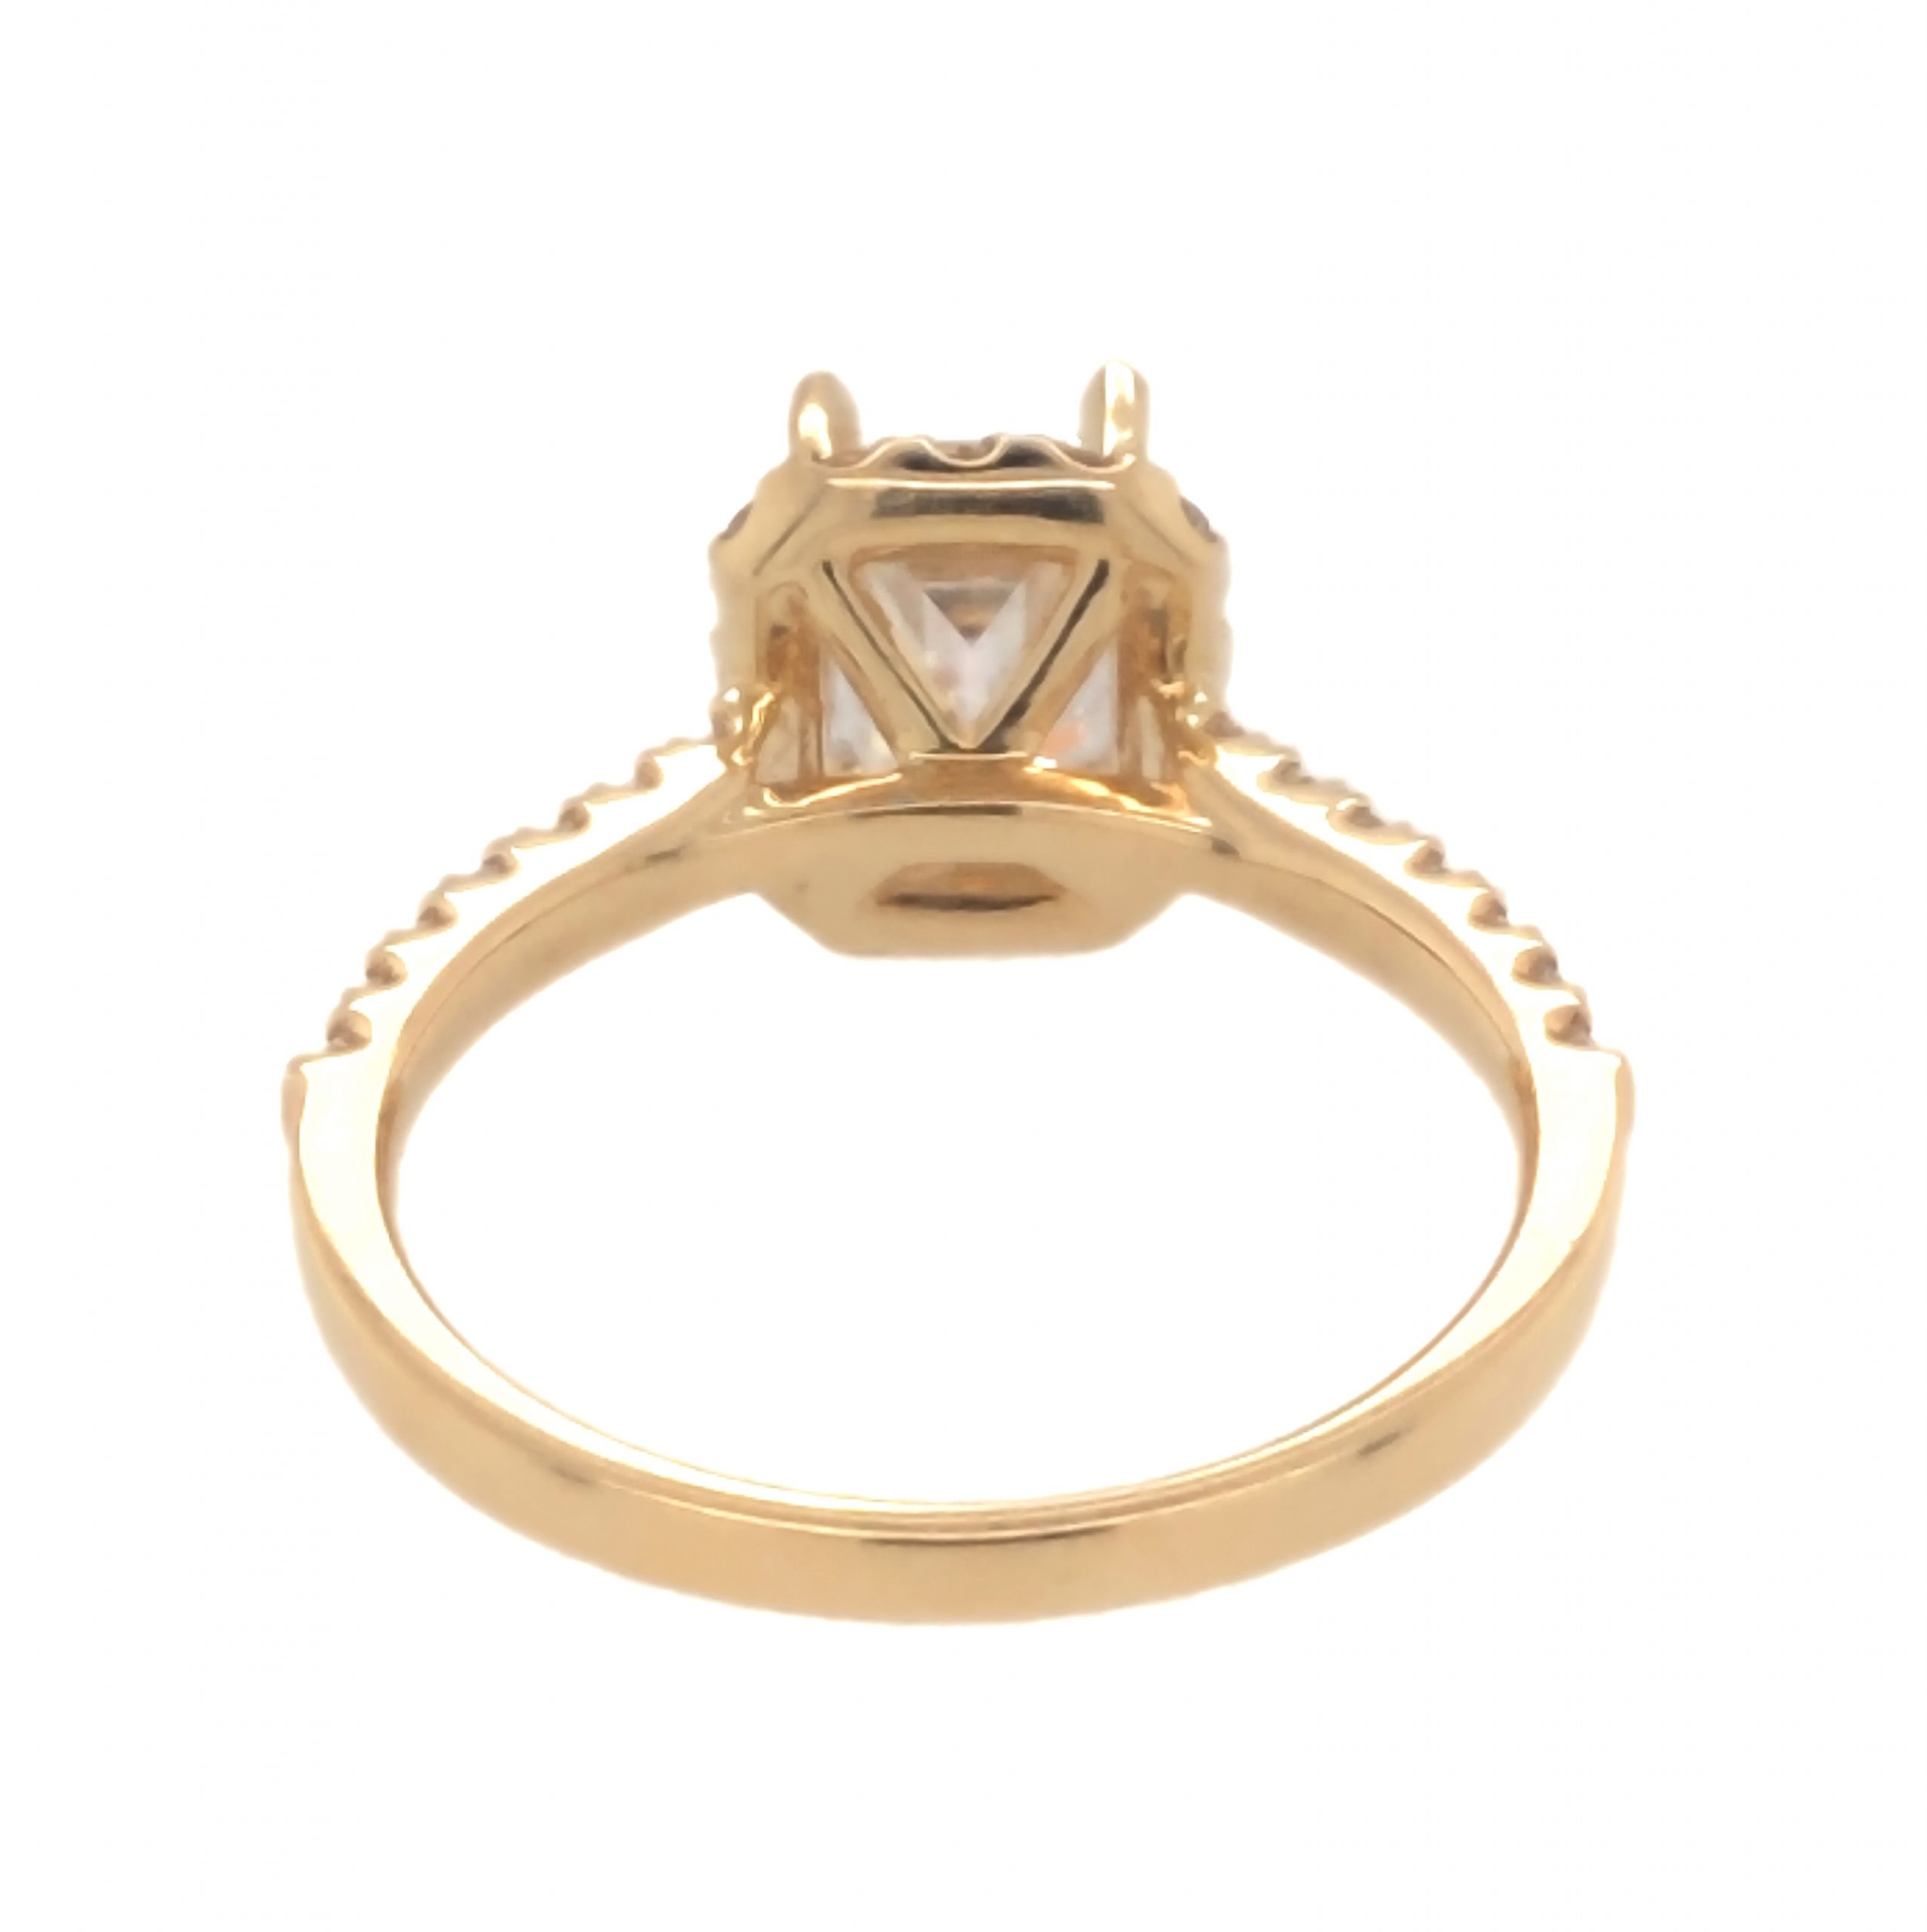 YELLOW GOLD TENSION SET DIAMOND RING - Argo & Lehne Jewelers, Tension Ring